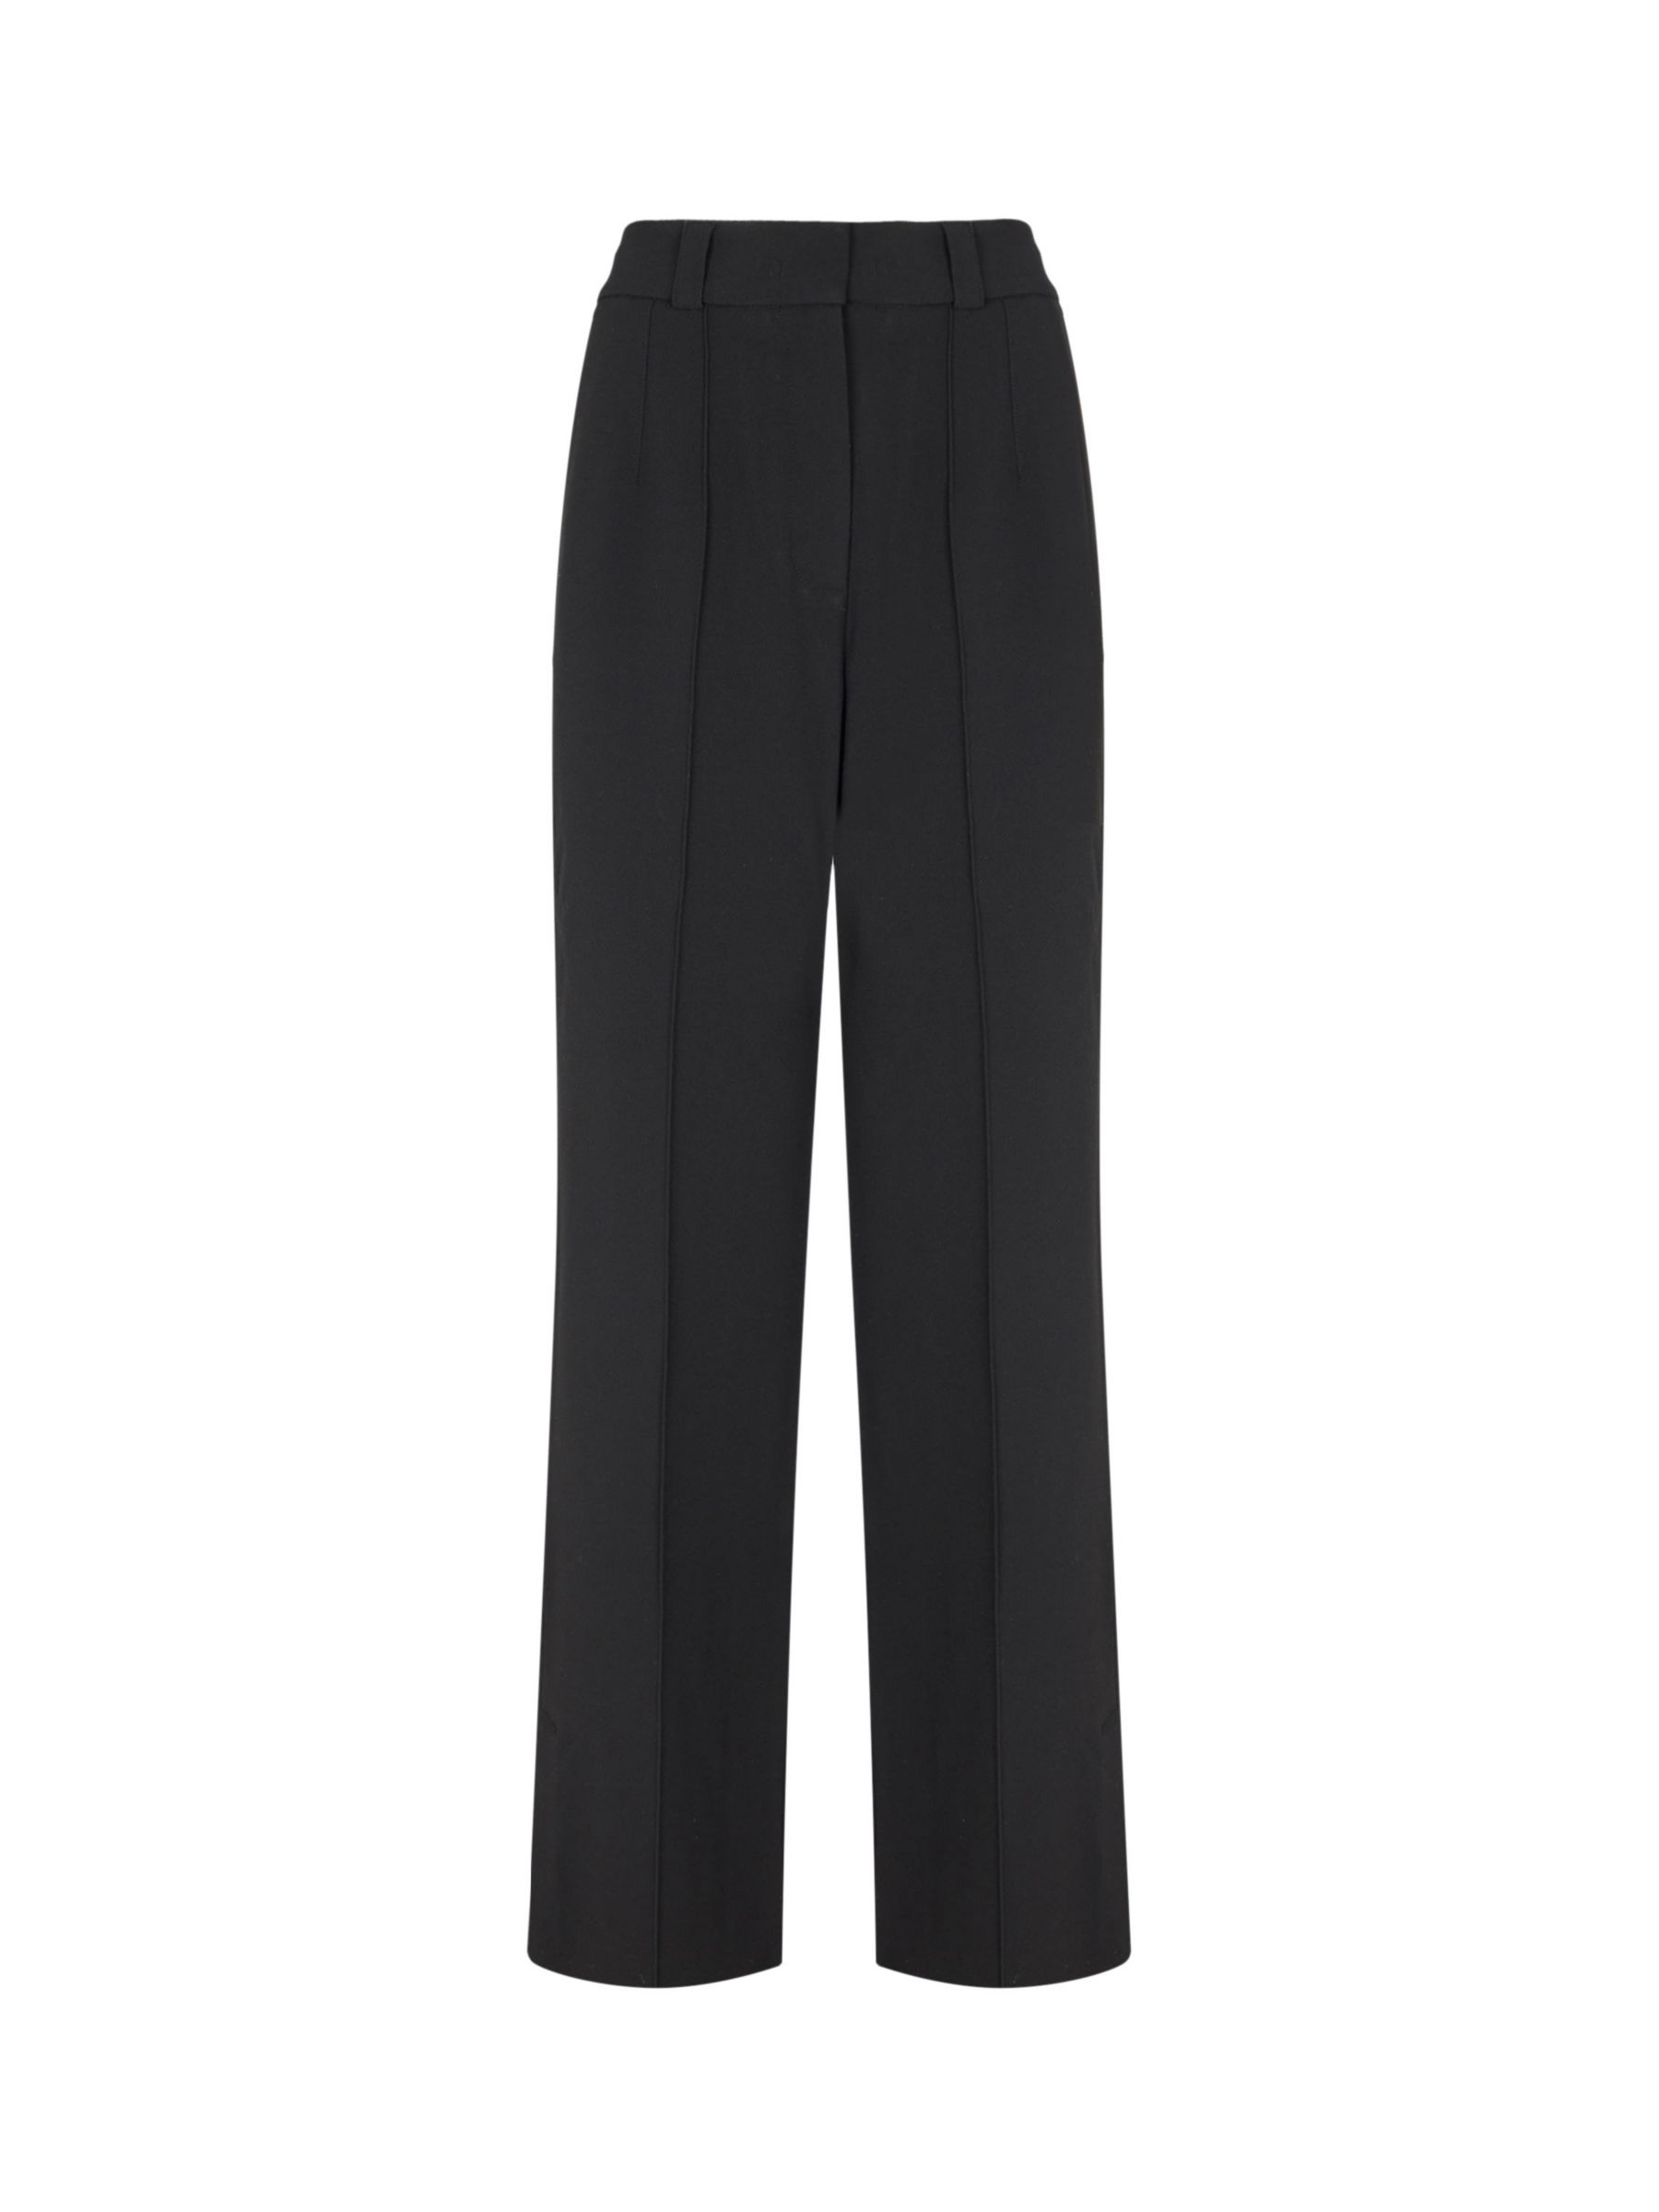 Mint Velvet Straight Front Pleat Trousers, Black at John Lewis & Partners